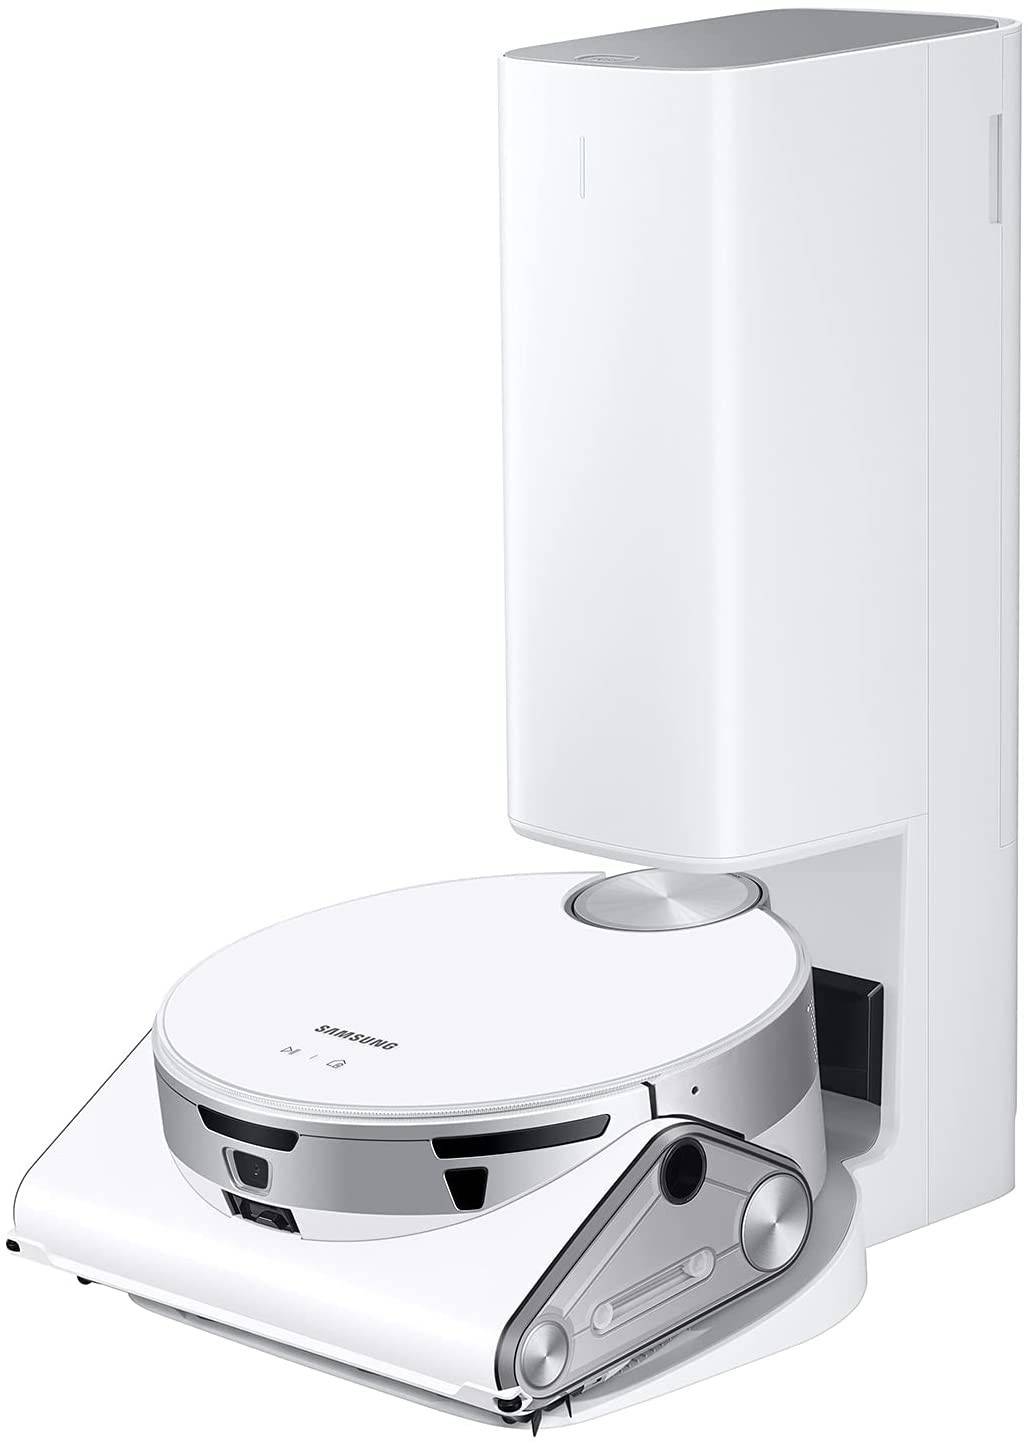 Samsung Jet Bot AI Plus Robot Vacuum Cleaner